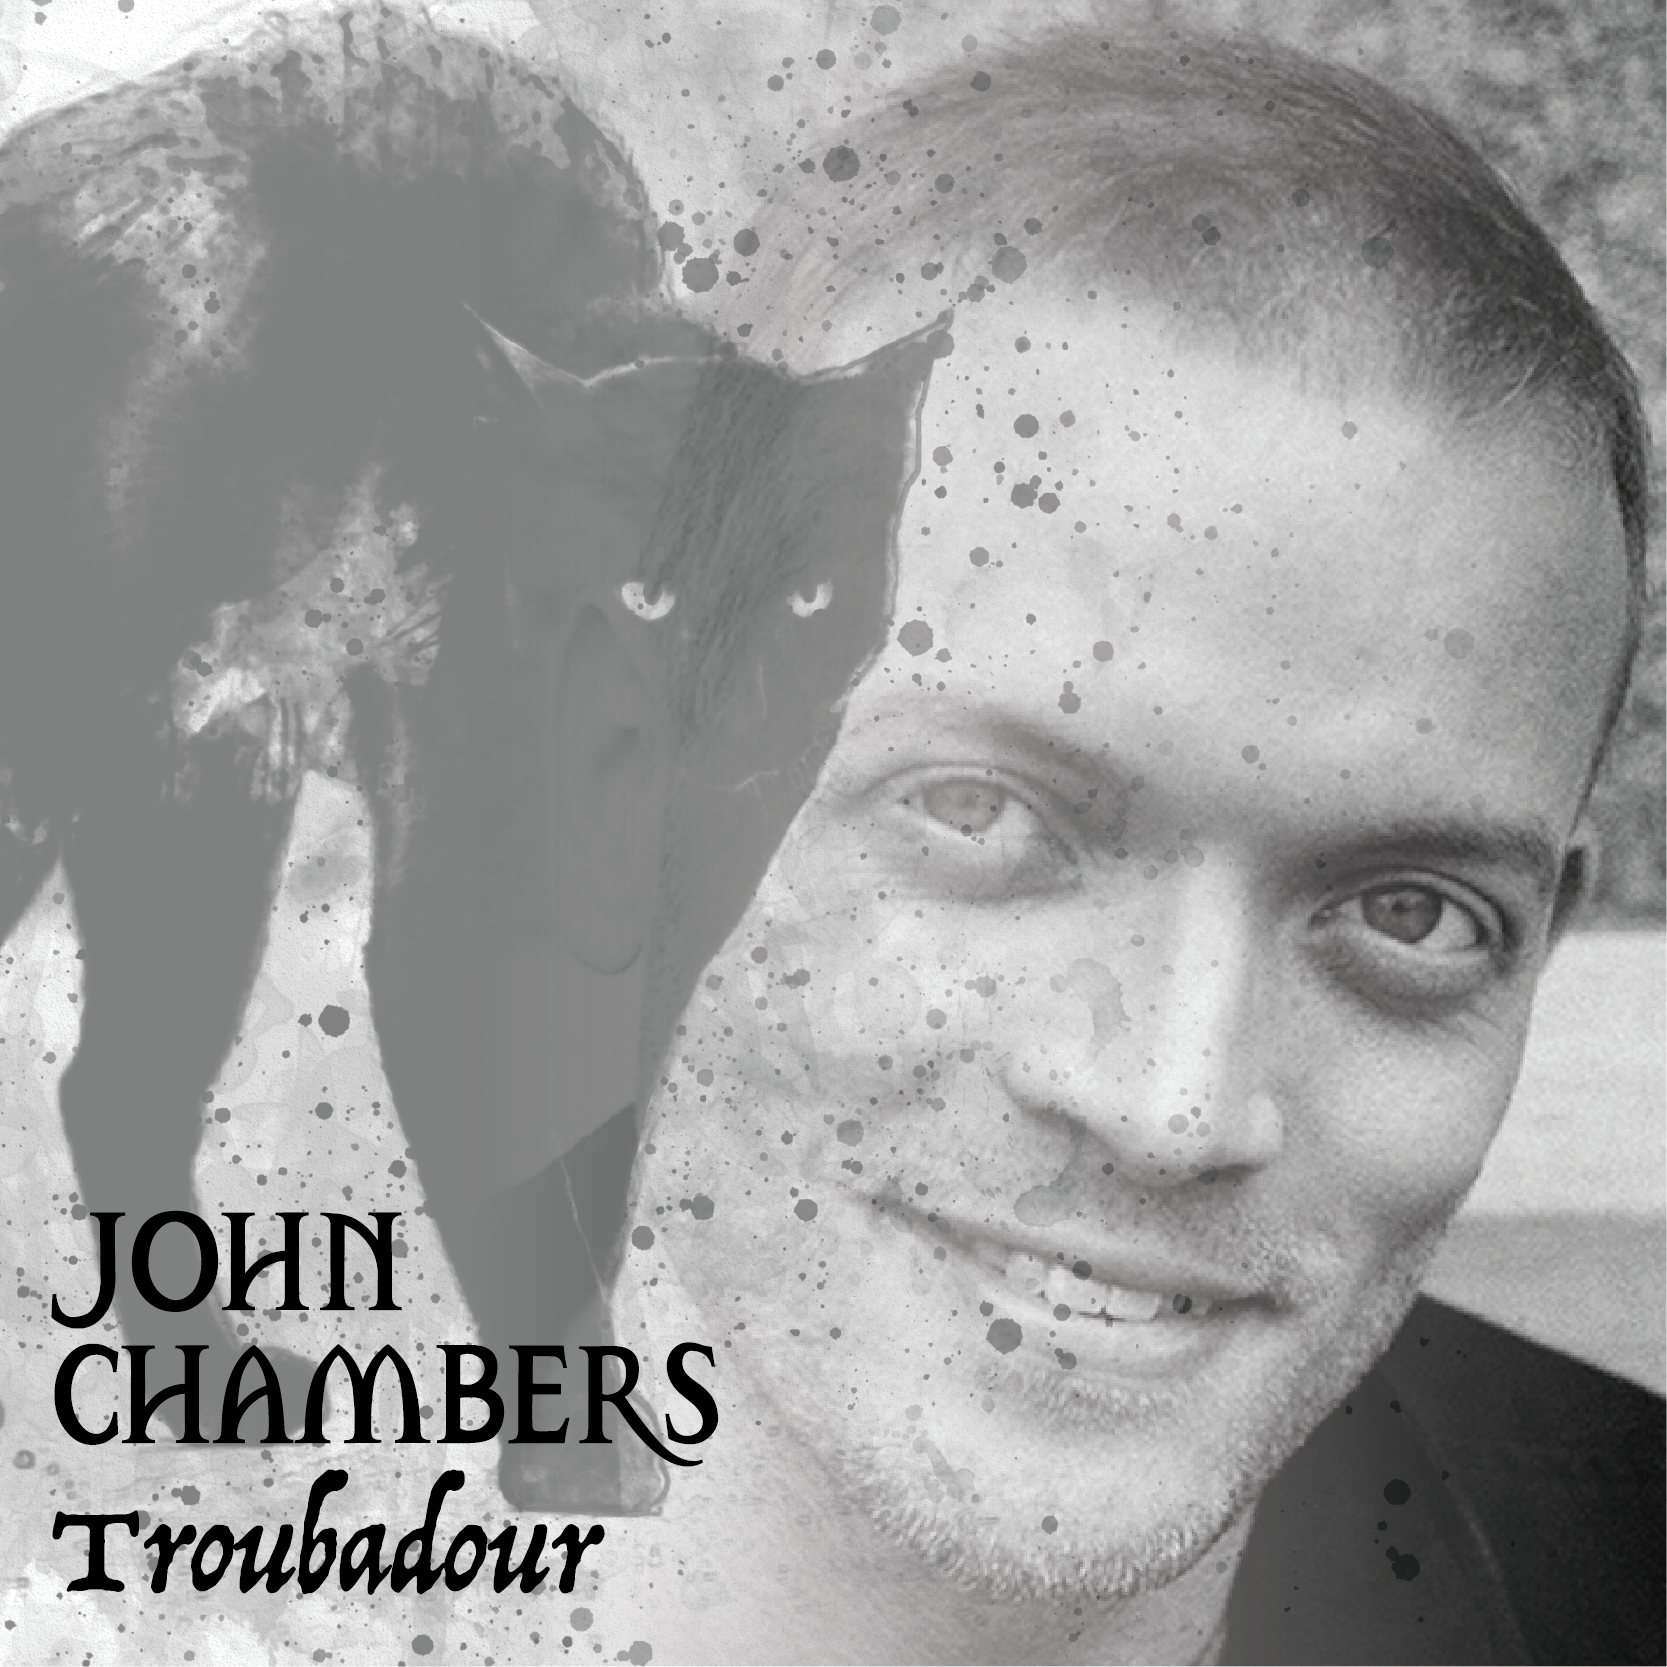 John Chambers is Troubadour